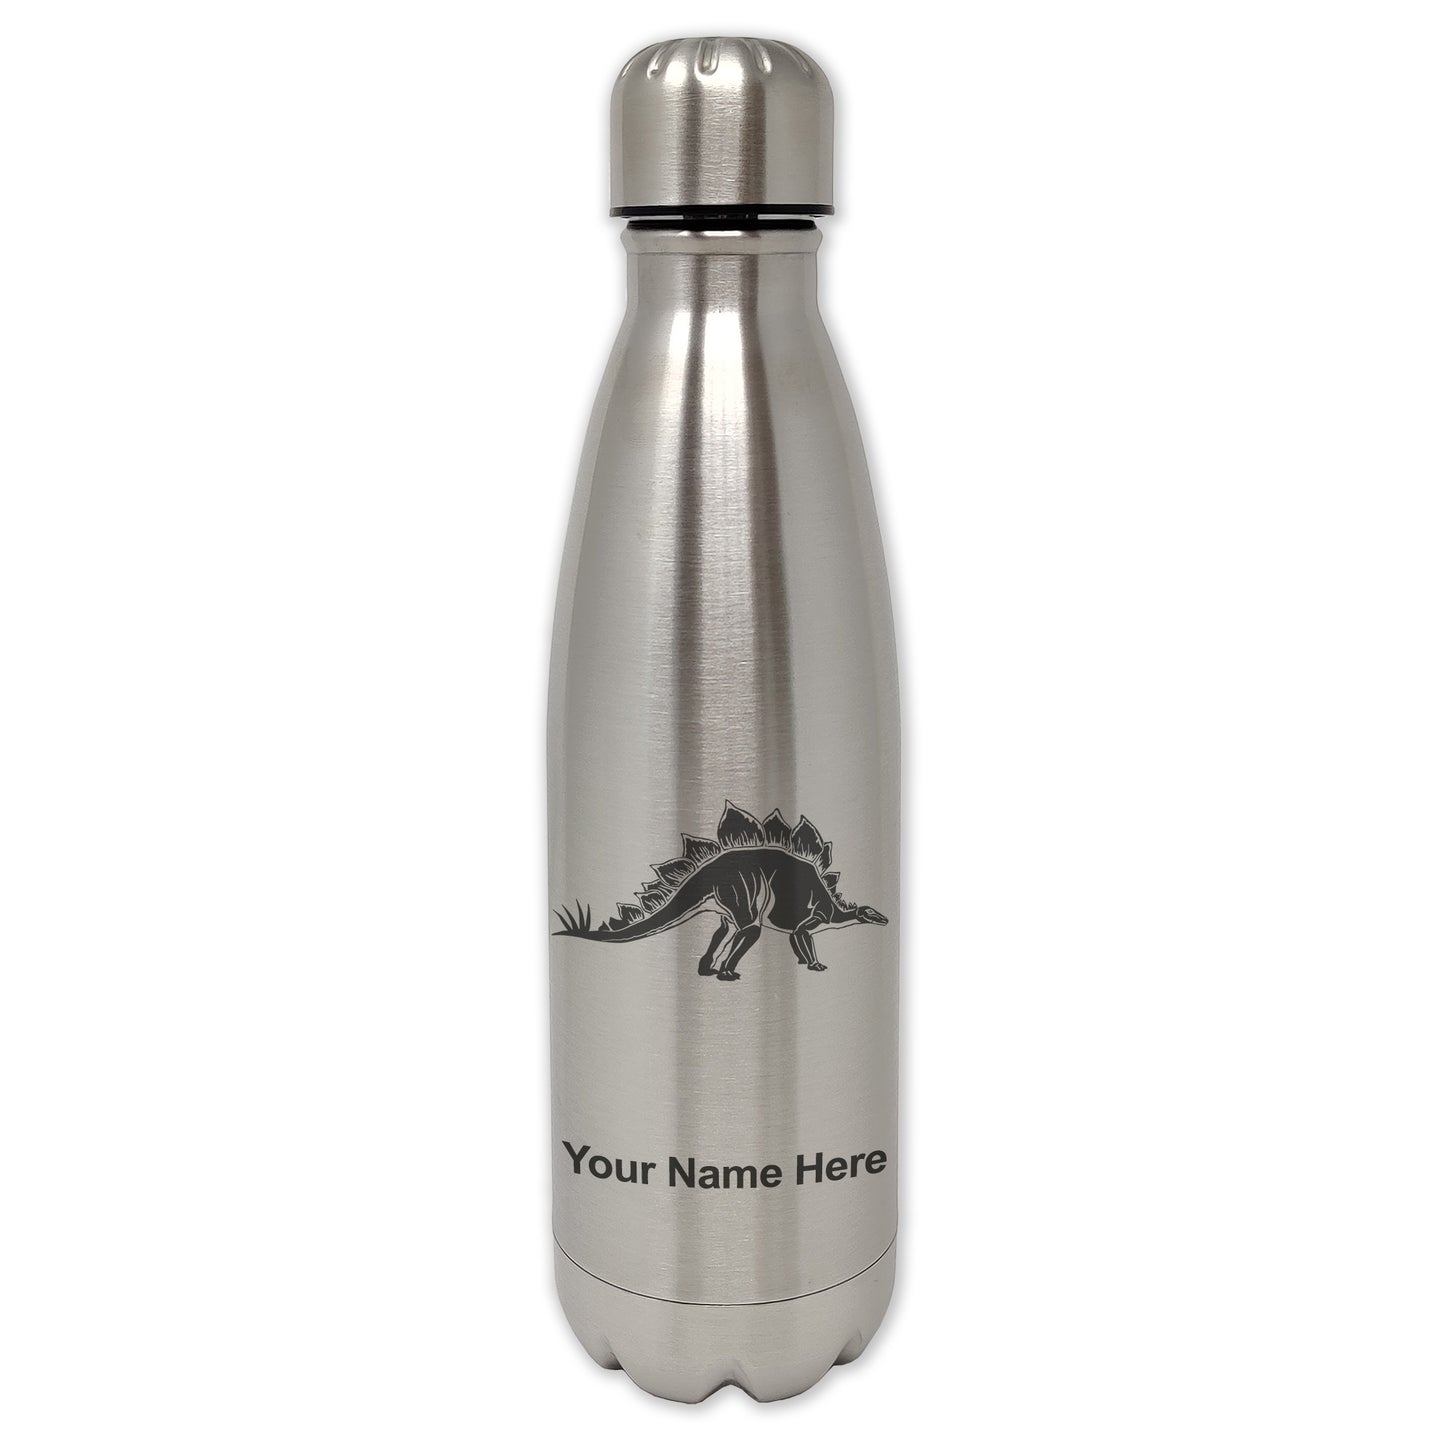 LaserGram Single Wall Water Bottle, Stegosaurus Dinosaur, Personalized Engraving Included